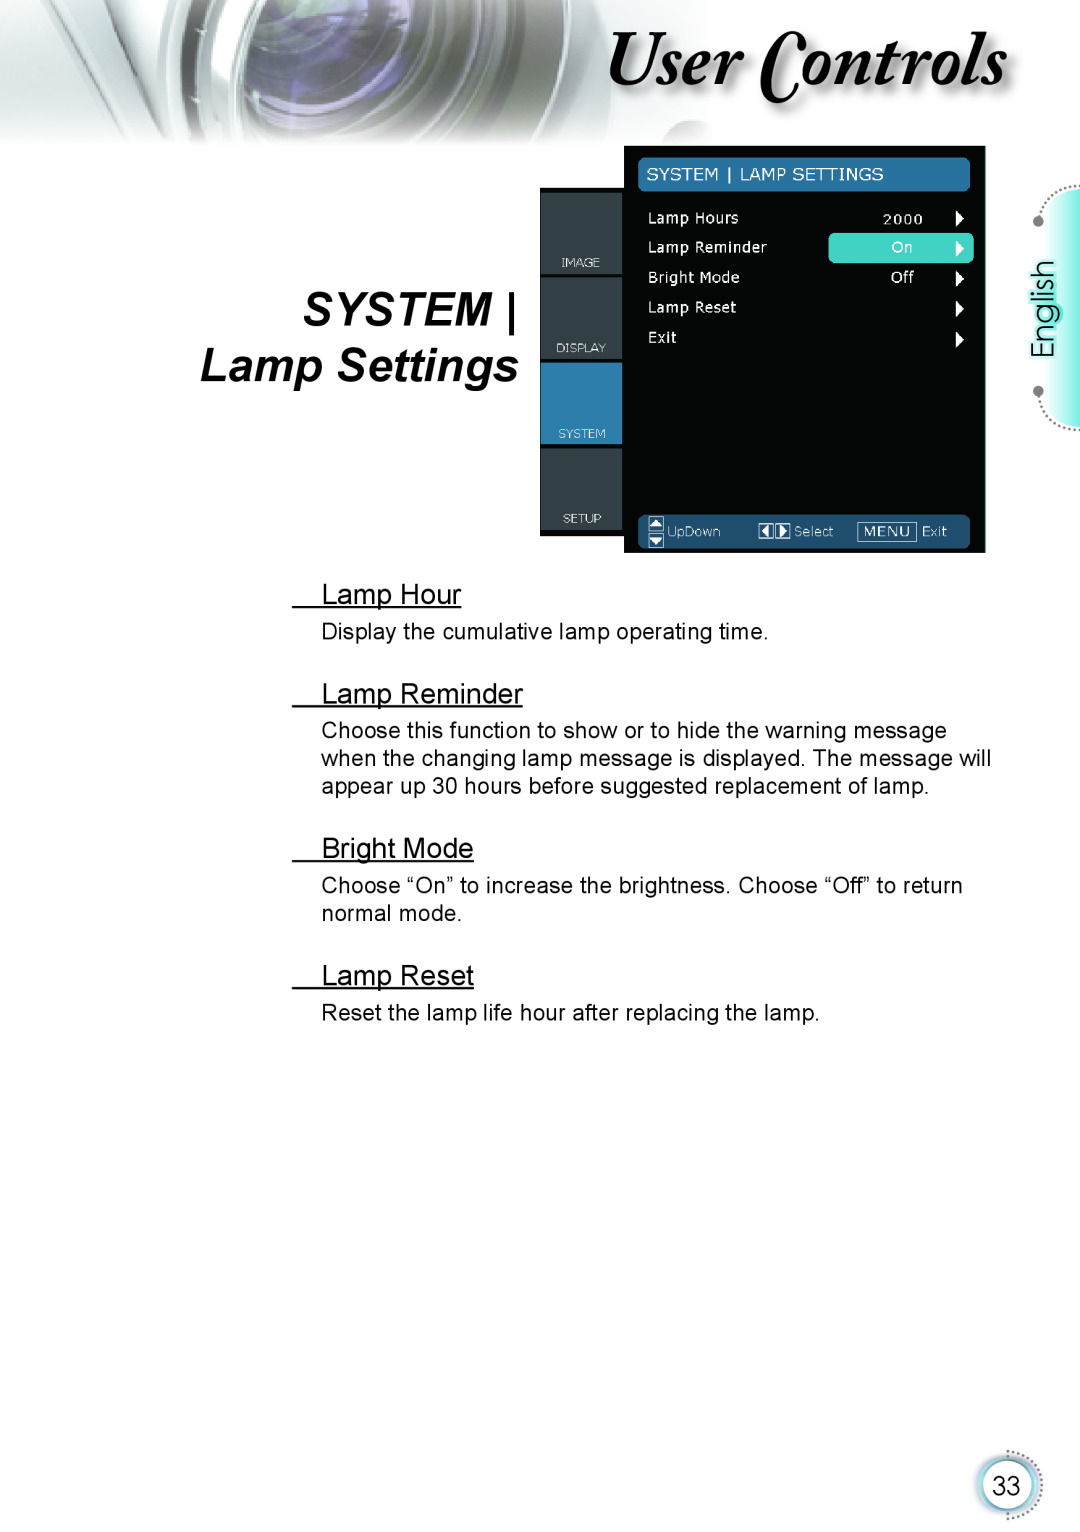 Optoma Technology HD20 SYSTEM | Lamp Settings, Lamp Hour, Lamp Reminder, Bright Mode, Lamp Reset, ser ontrols, English 